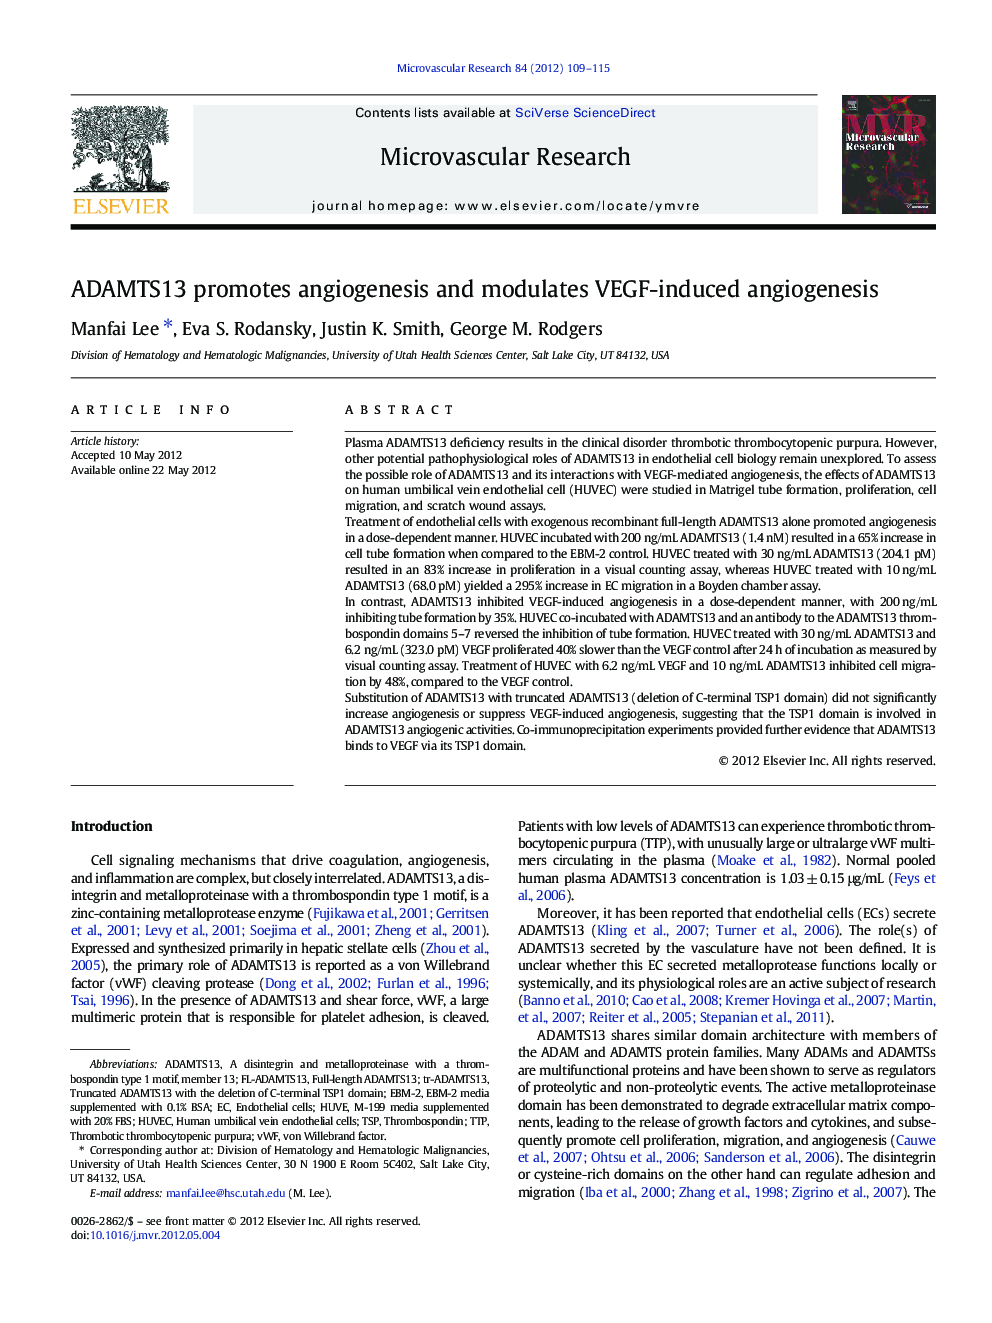 ADAMTS13 promotes angiogenesis and modulates VEGF-induced angiogenesis